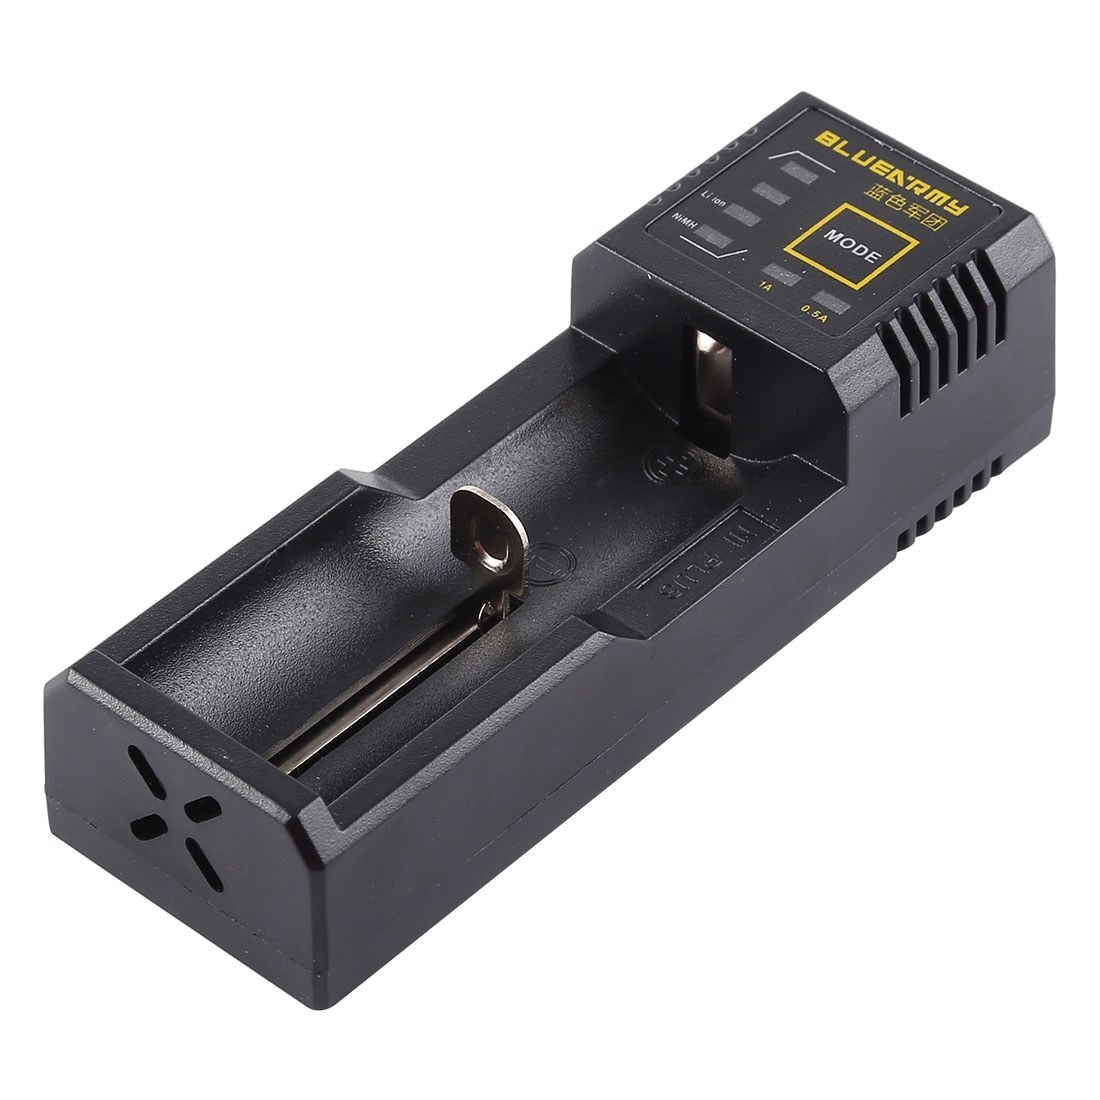 N1 PLUS Micro USB Smart Battery Charger with Indicator Light for 26650, 18650, 18500, 14500, 16340 (RCR123) IMR / Li-on Battery or AA, AAA, AAAA, C Ni-MH / Ni-Cd Battery